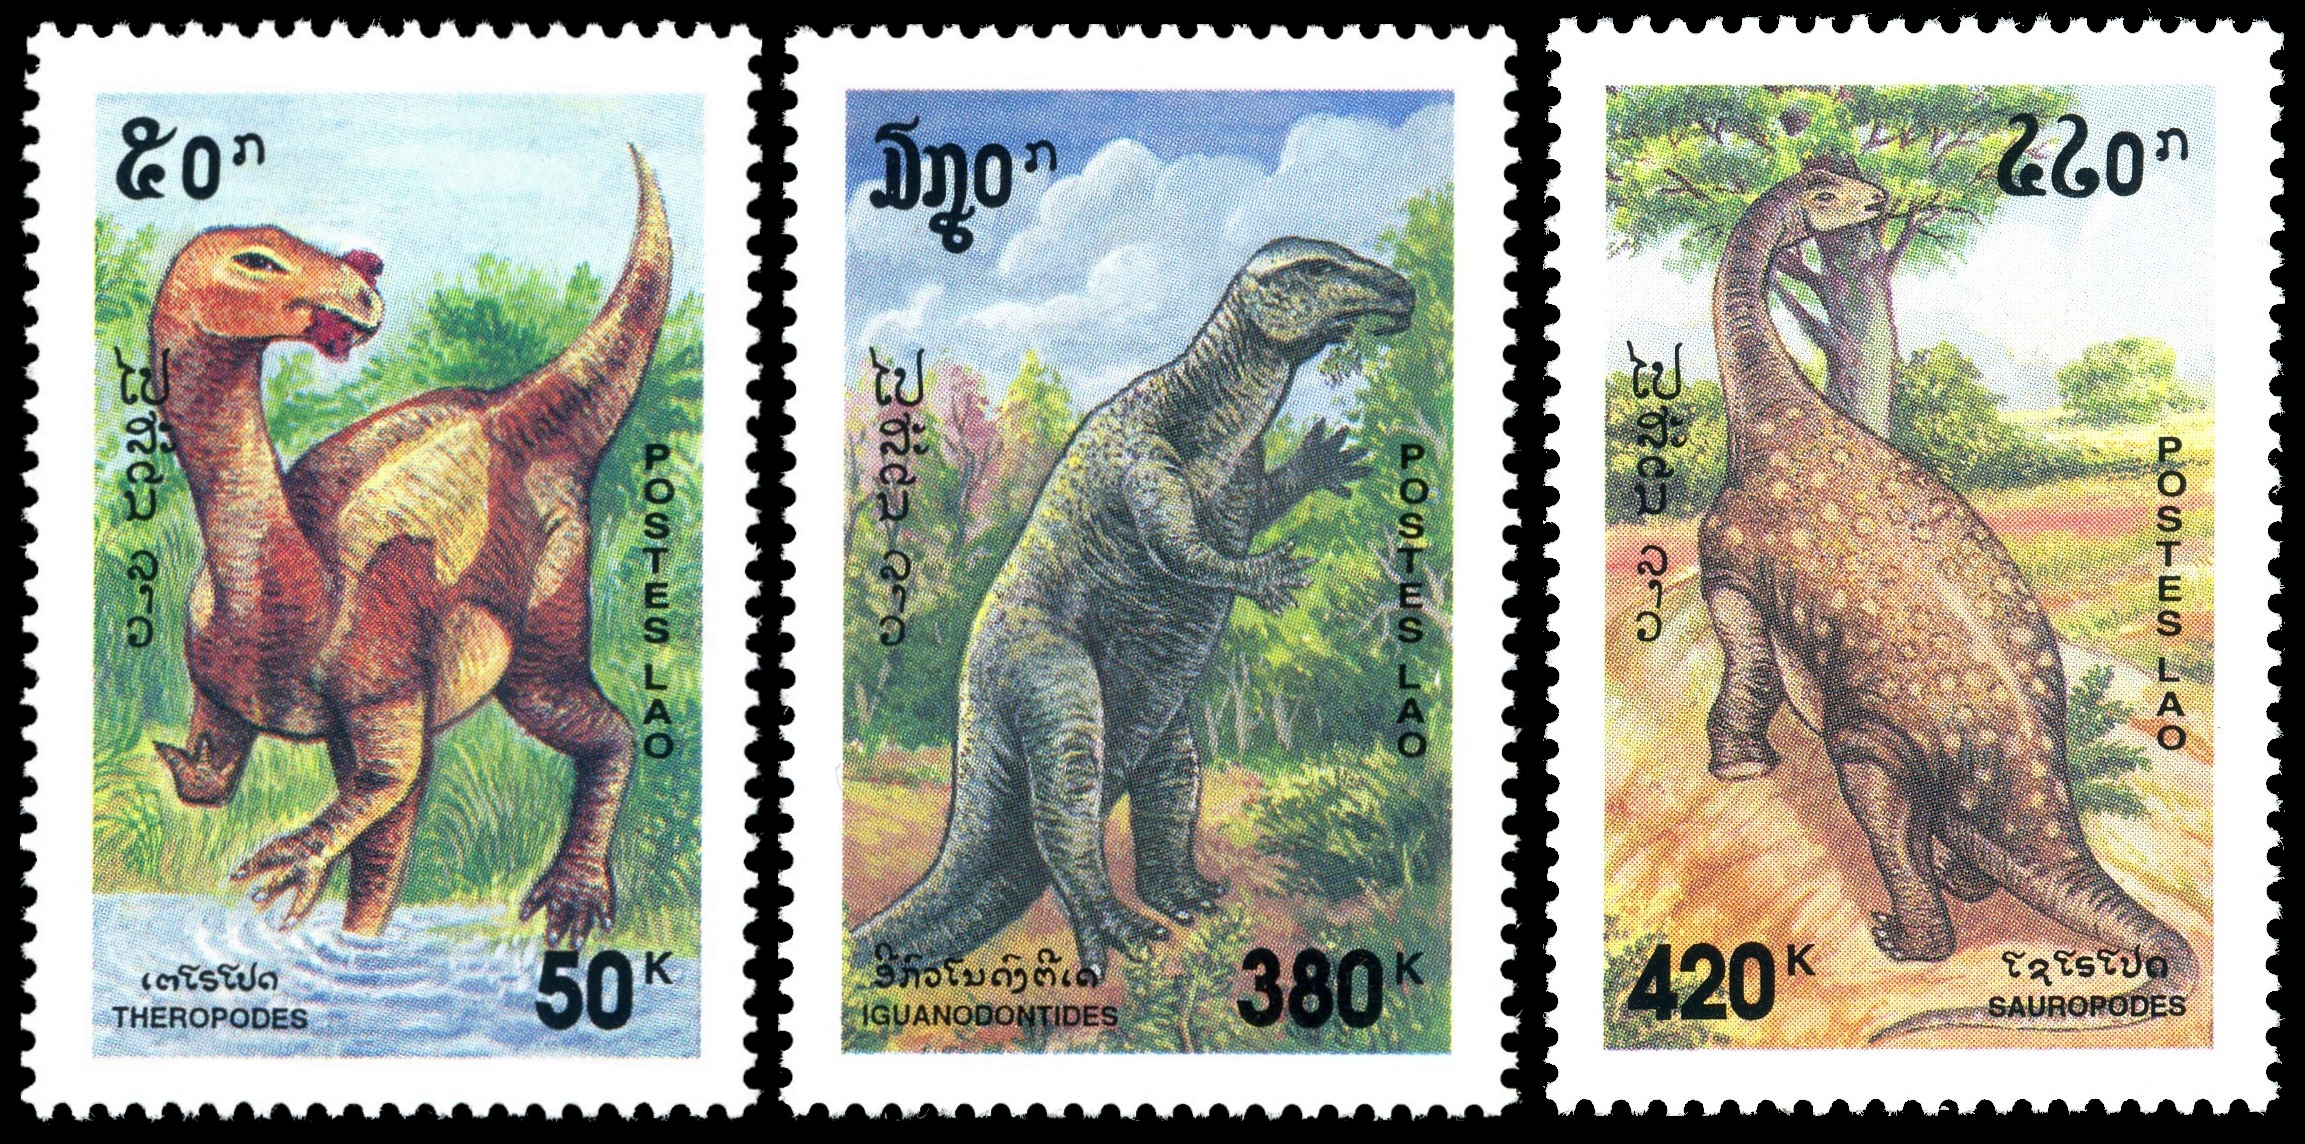 Dinosaur stamps of Laos